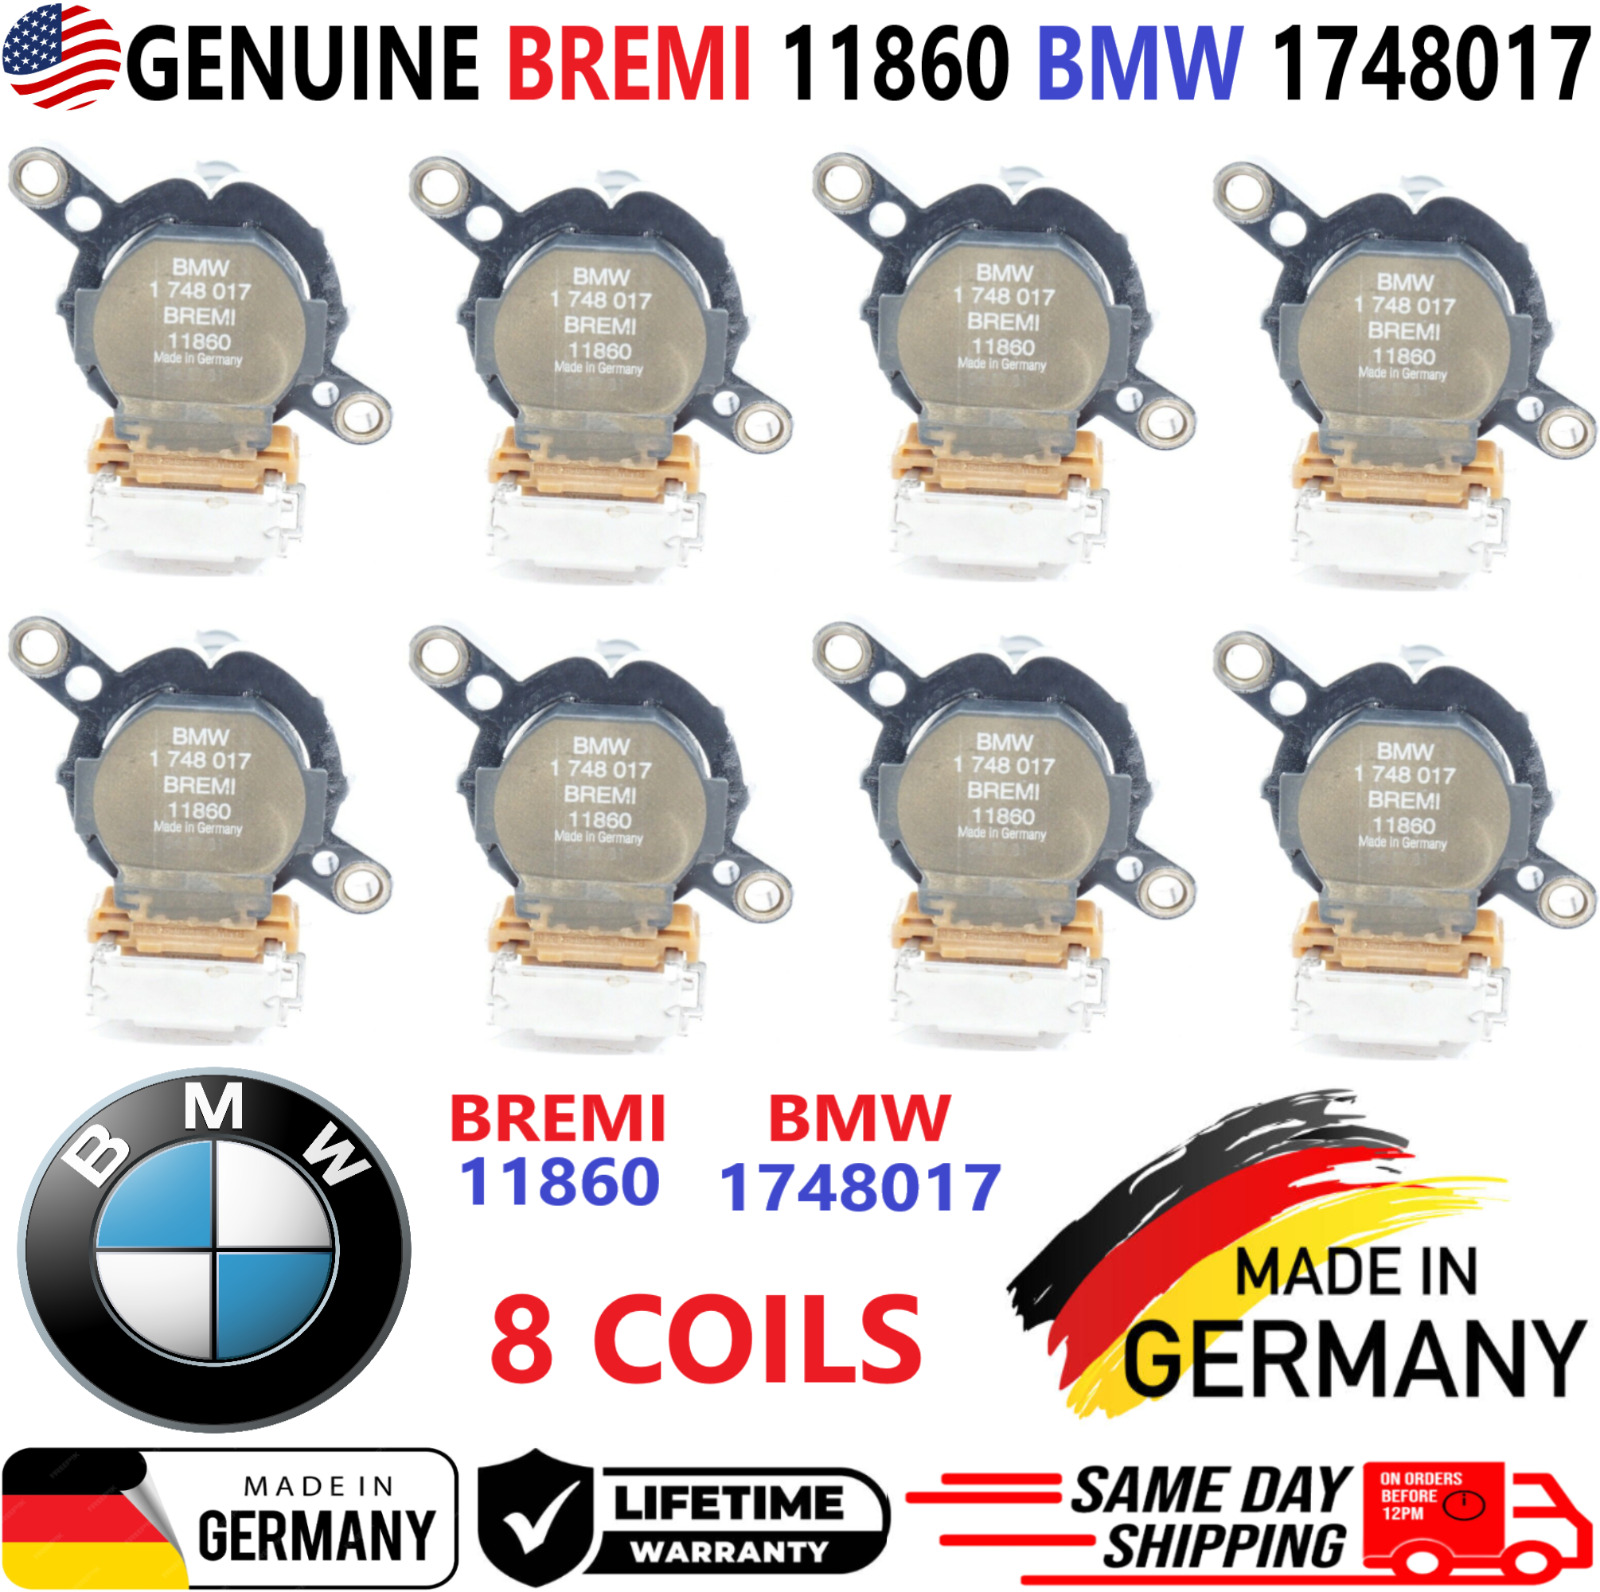 OEM GENUINE BREMi BMW x8 Ignition Coils For 1996-2005 BMW V6 V8 V12, 1748017